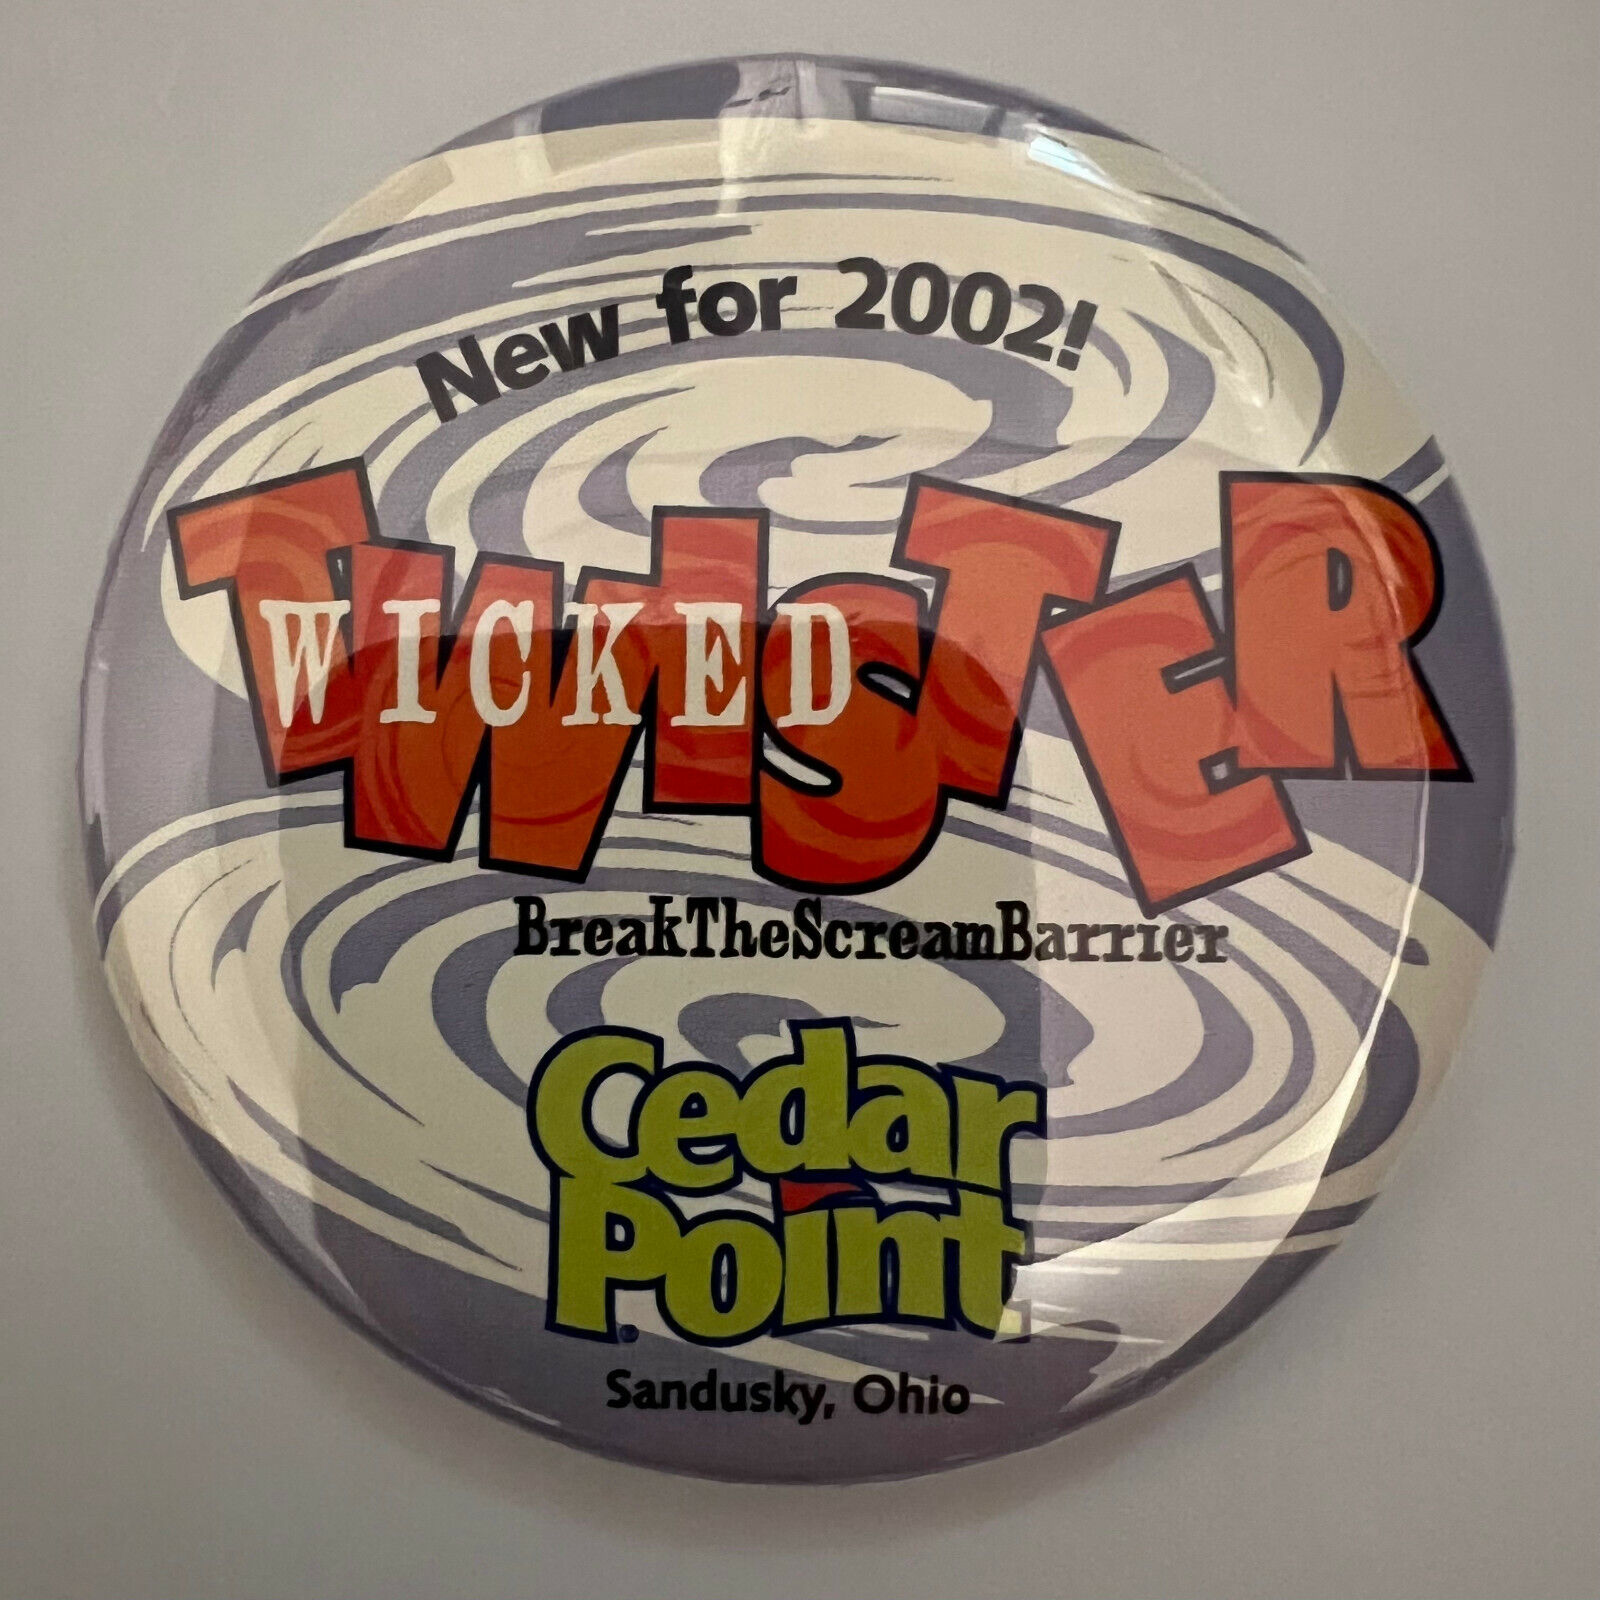 Cedar Point 2002 Opening Year Wicked Twister Roller Coaster 3